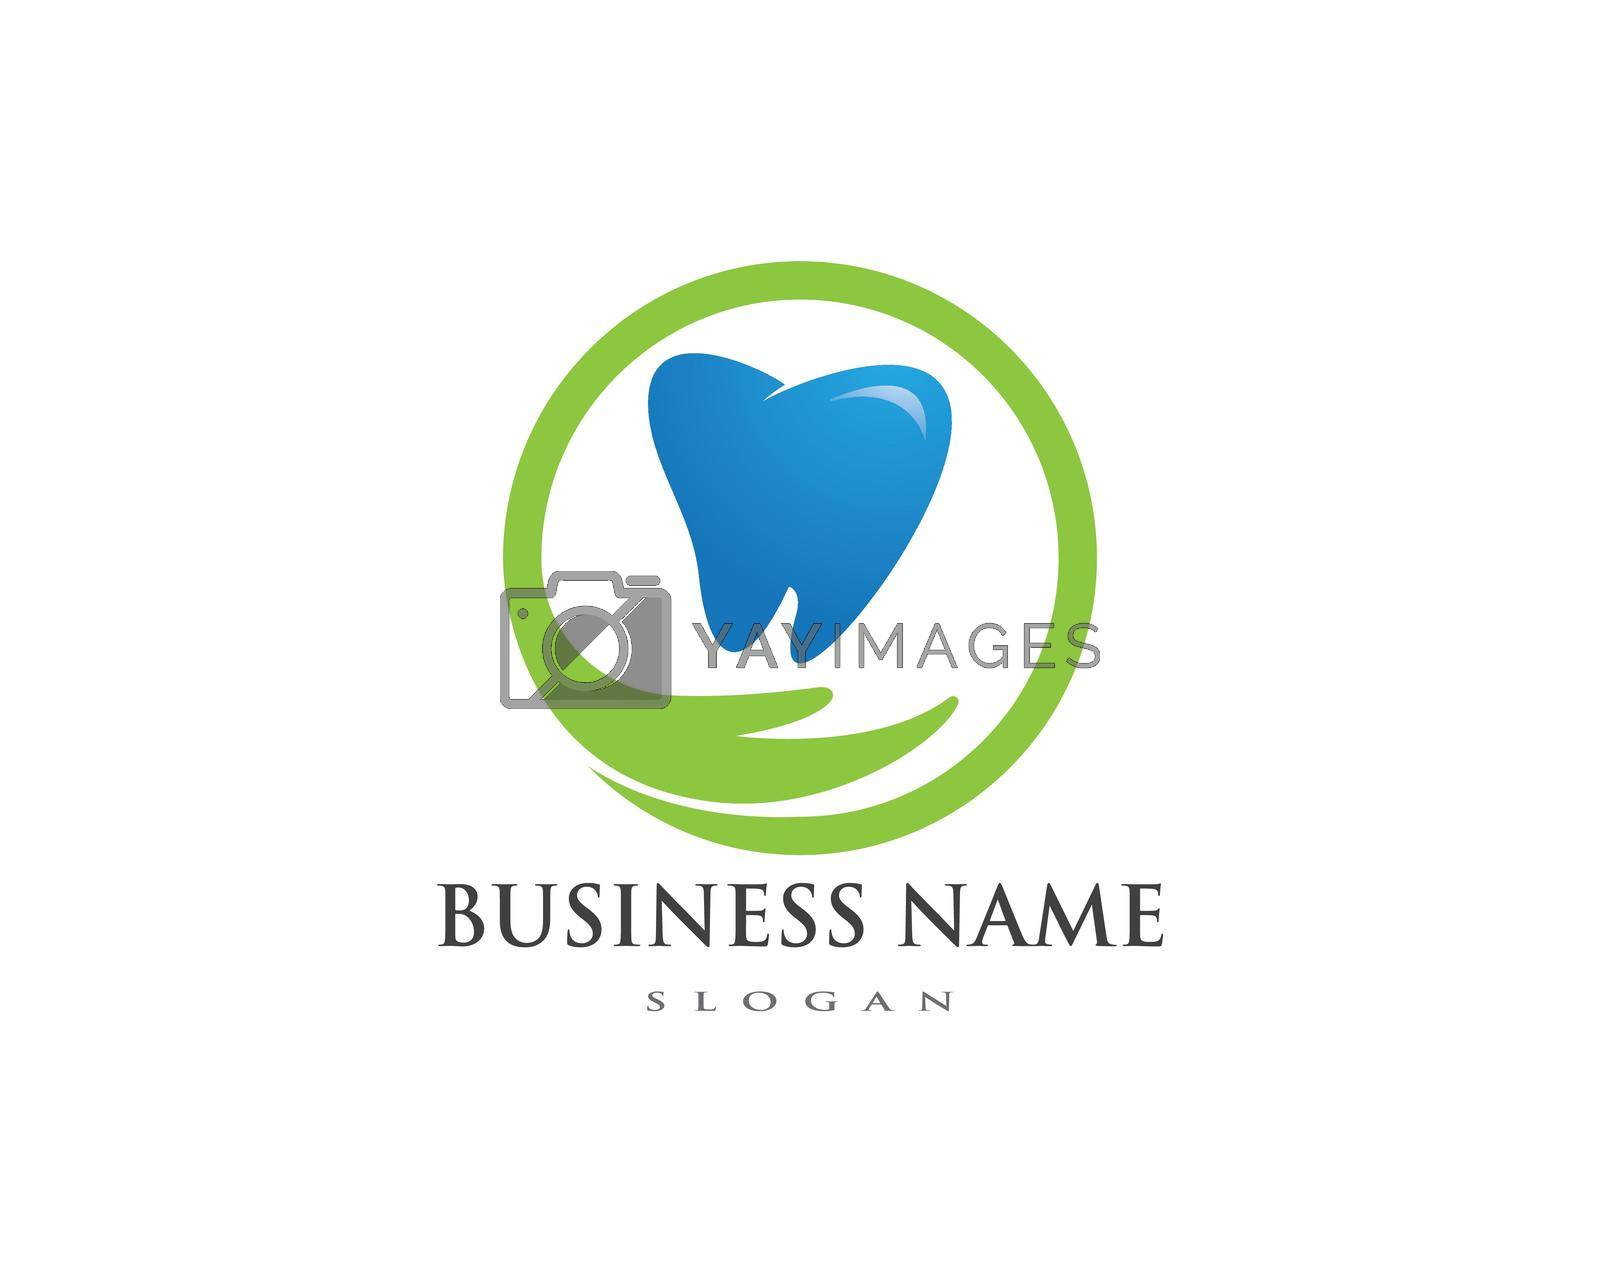 Smile Dental logo Template vector illustration icon design